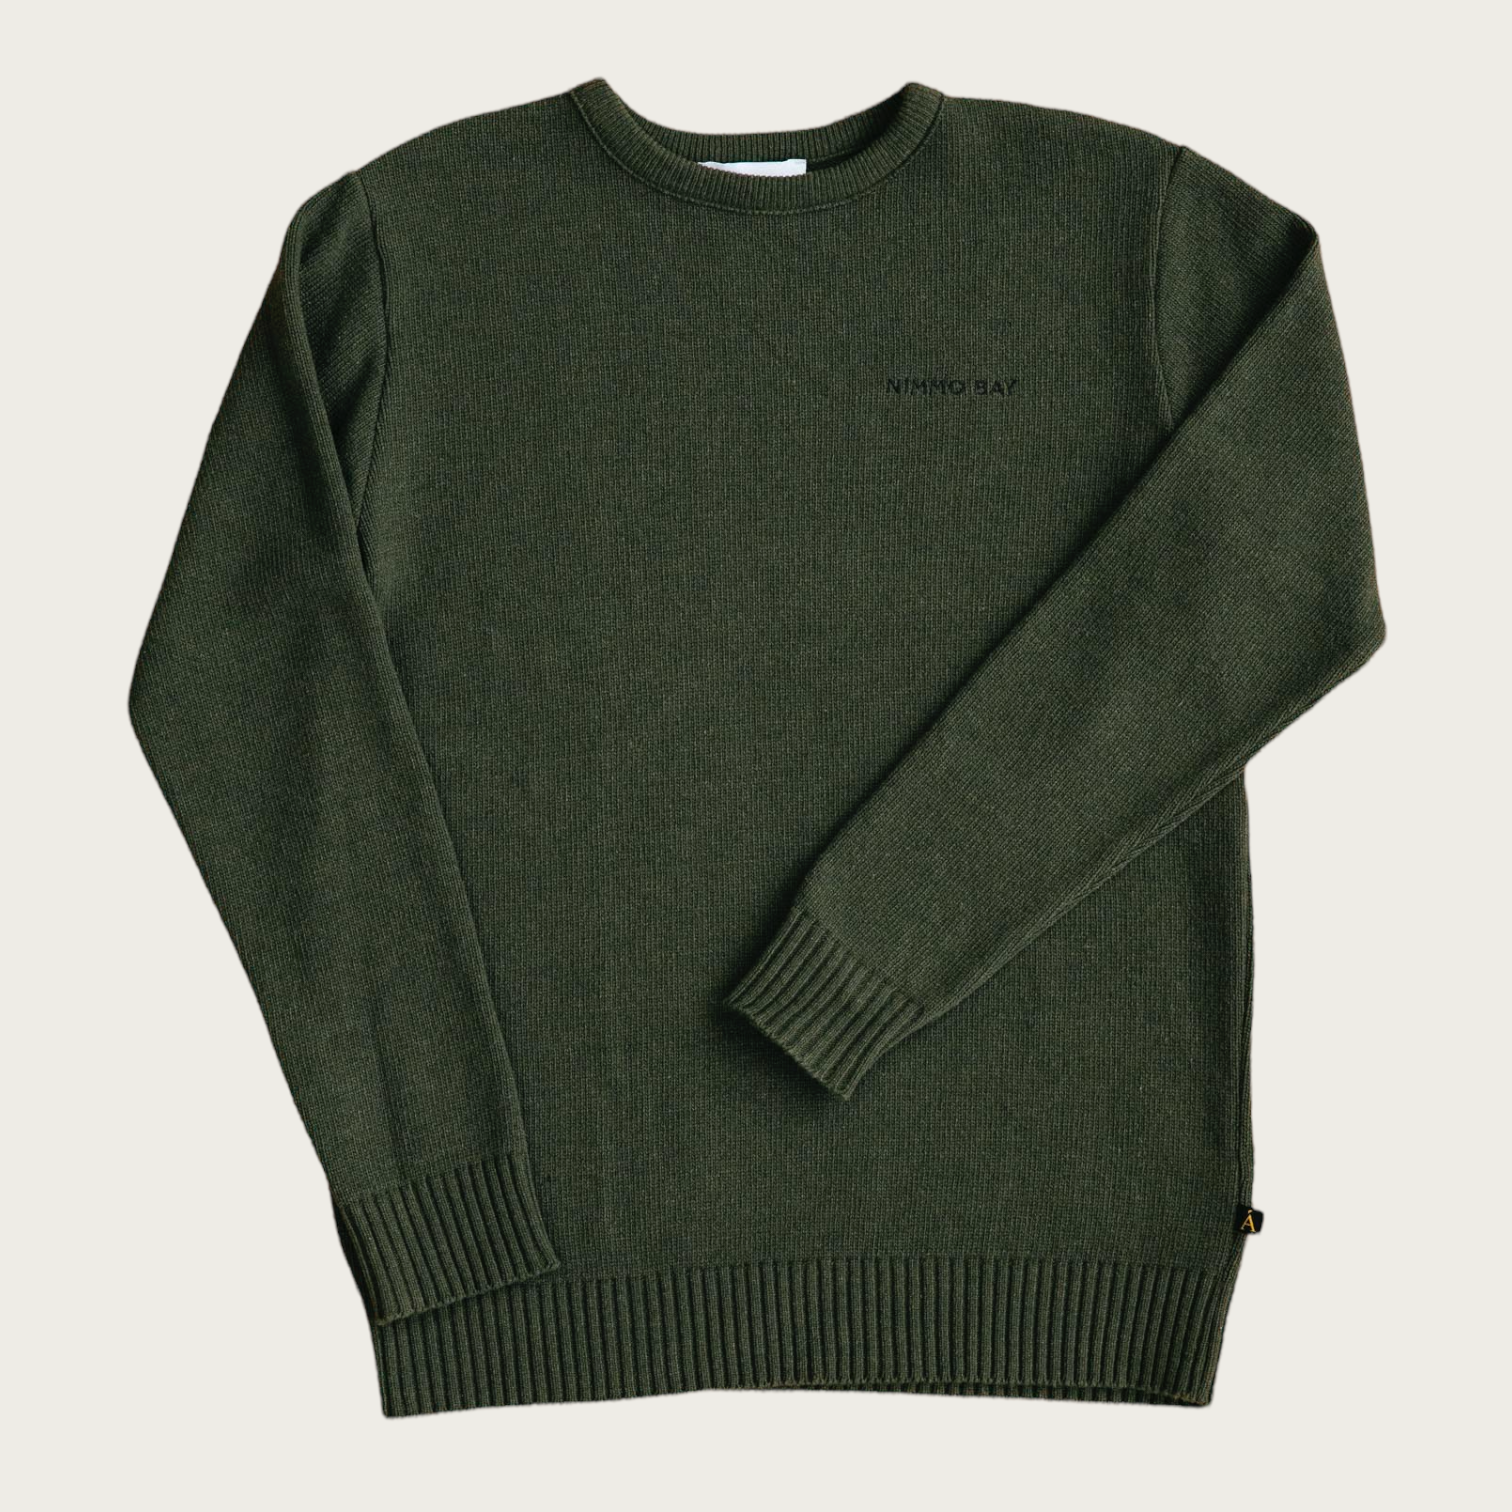 Nimmo Bay x Anian green knit Fisherman sweater